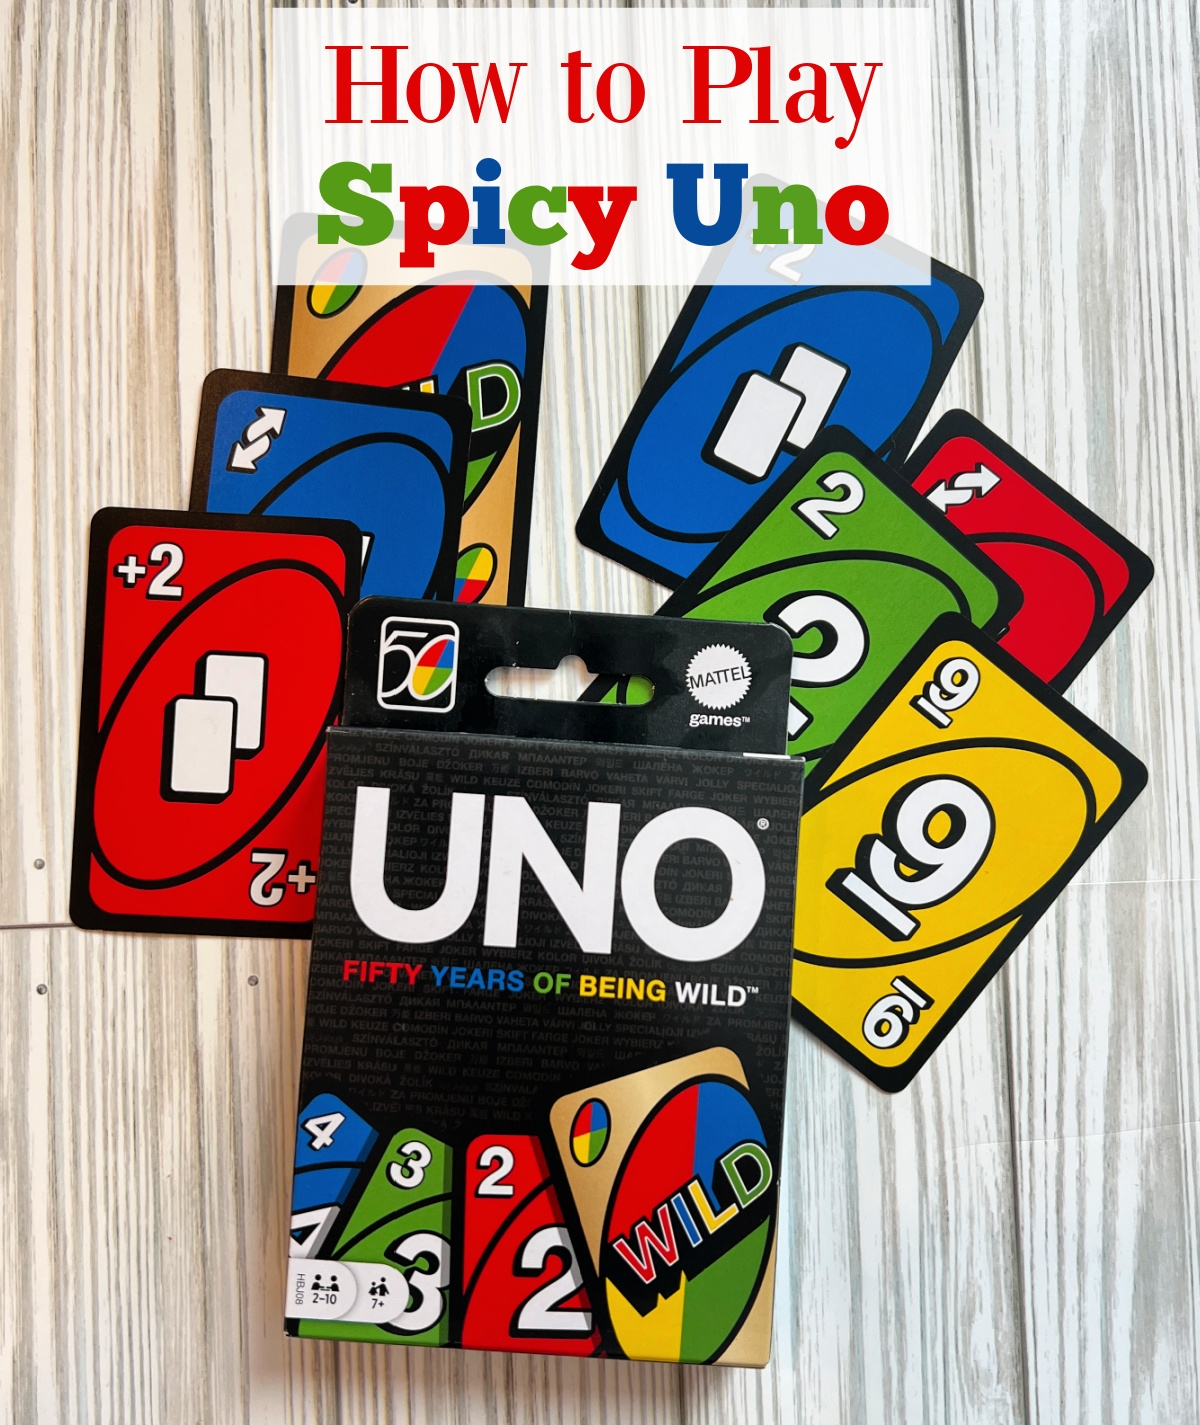 Spicy Uno Rules Fun Squared